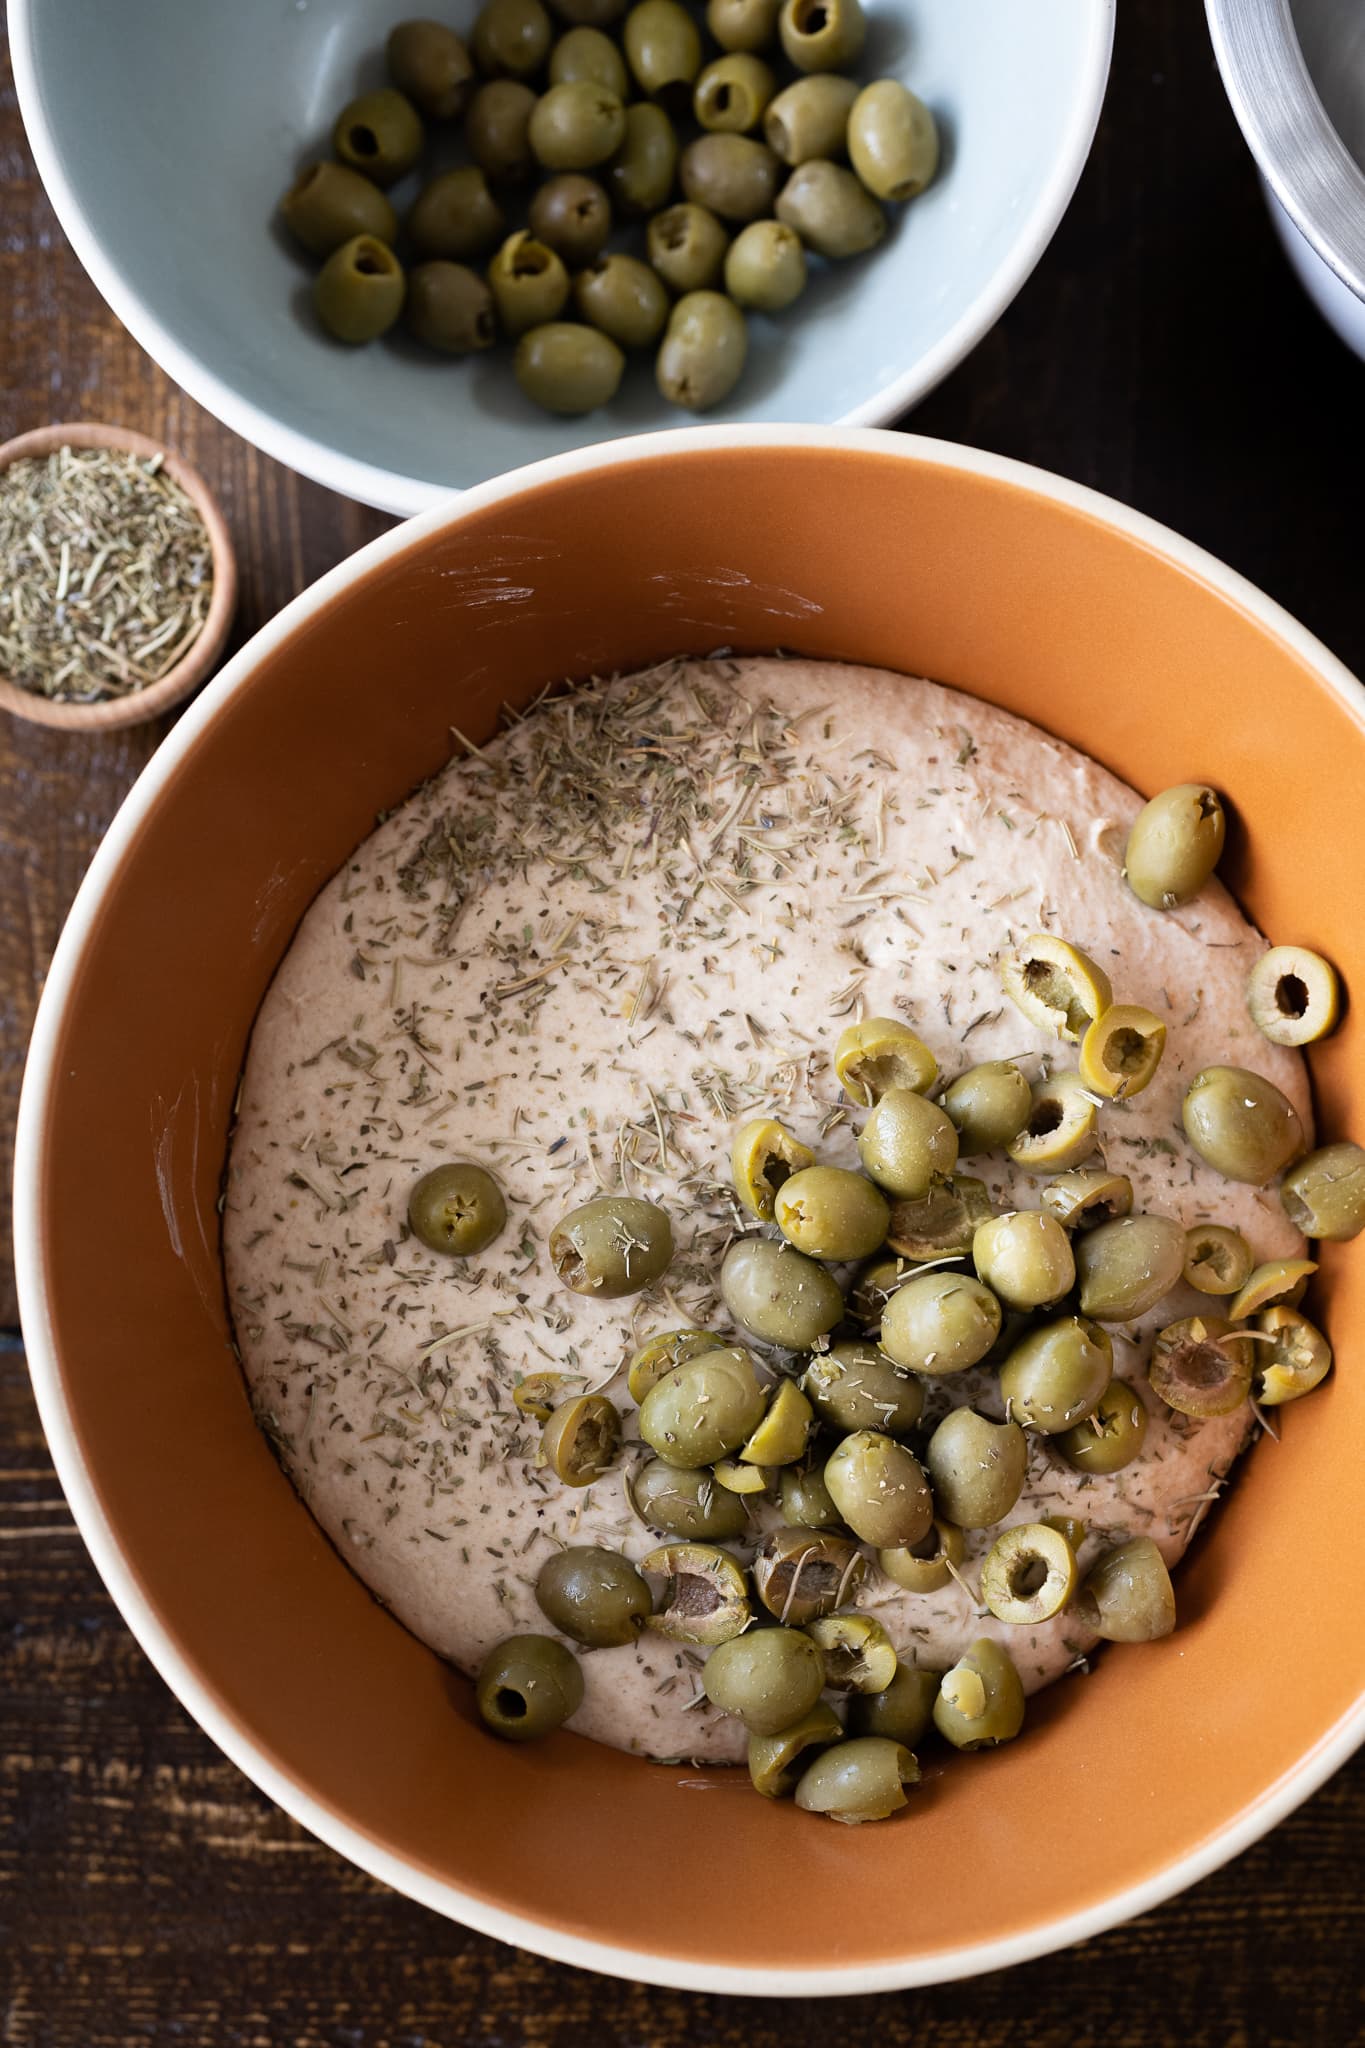 Sourdough bread with castelvetrano olives